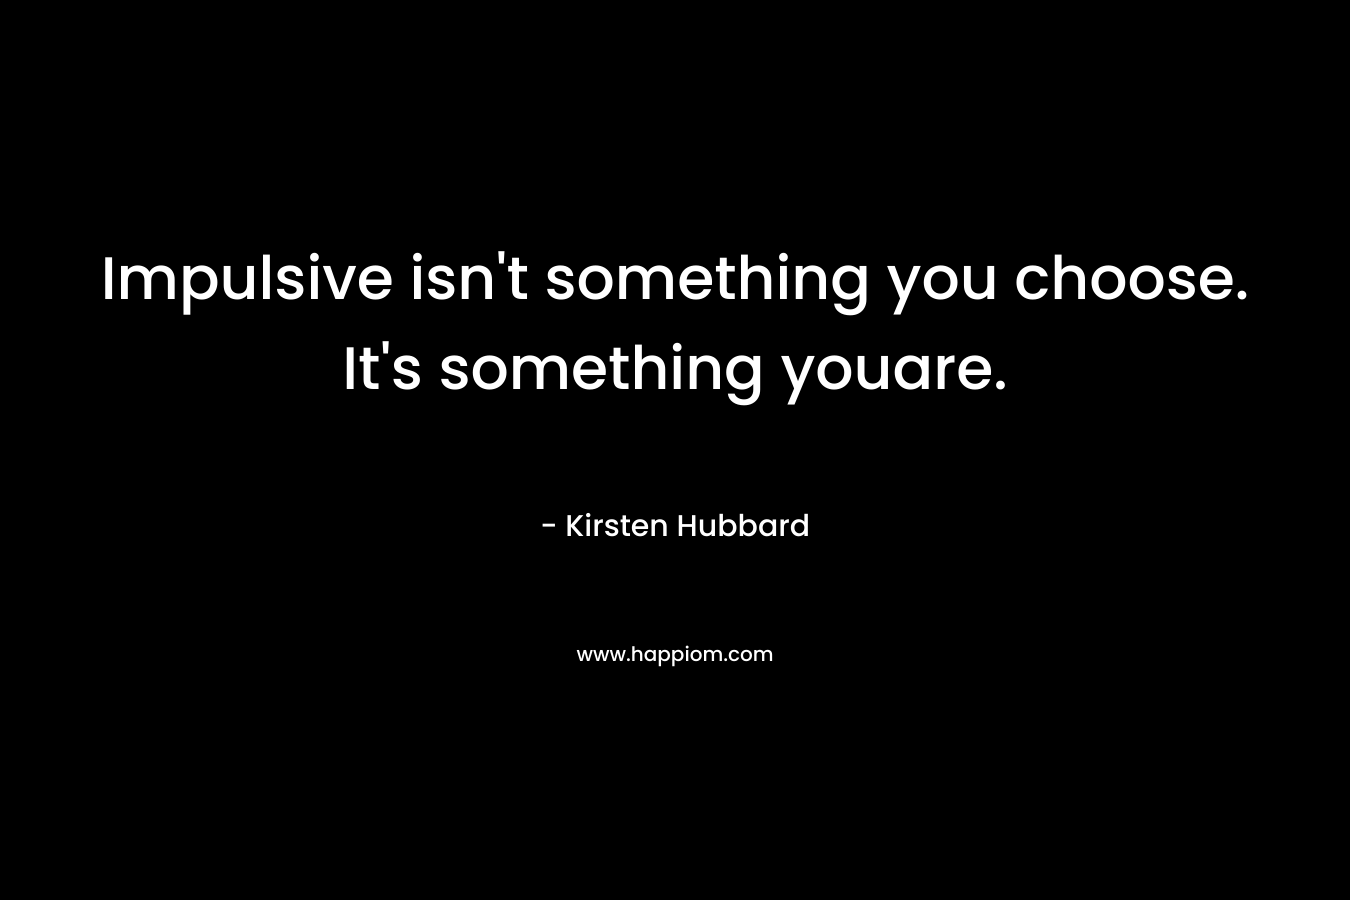 Impulsive isn’t something you choose. It’s something youare. – Kirsten Hubbard